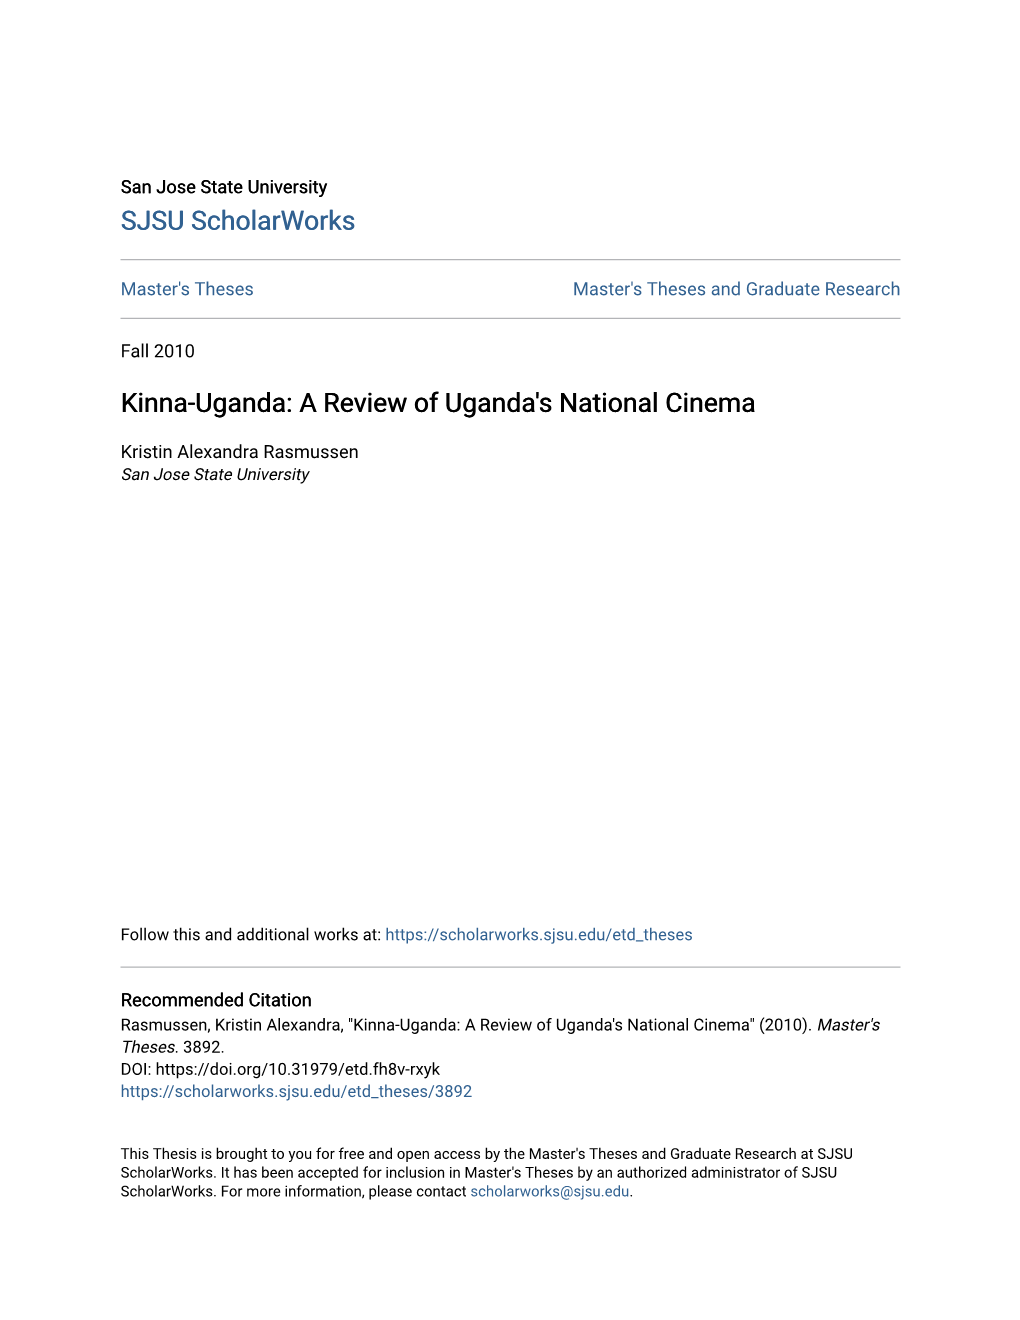 Kinna-Uganda: a Review of Uganda's National Cinema